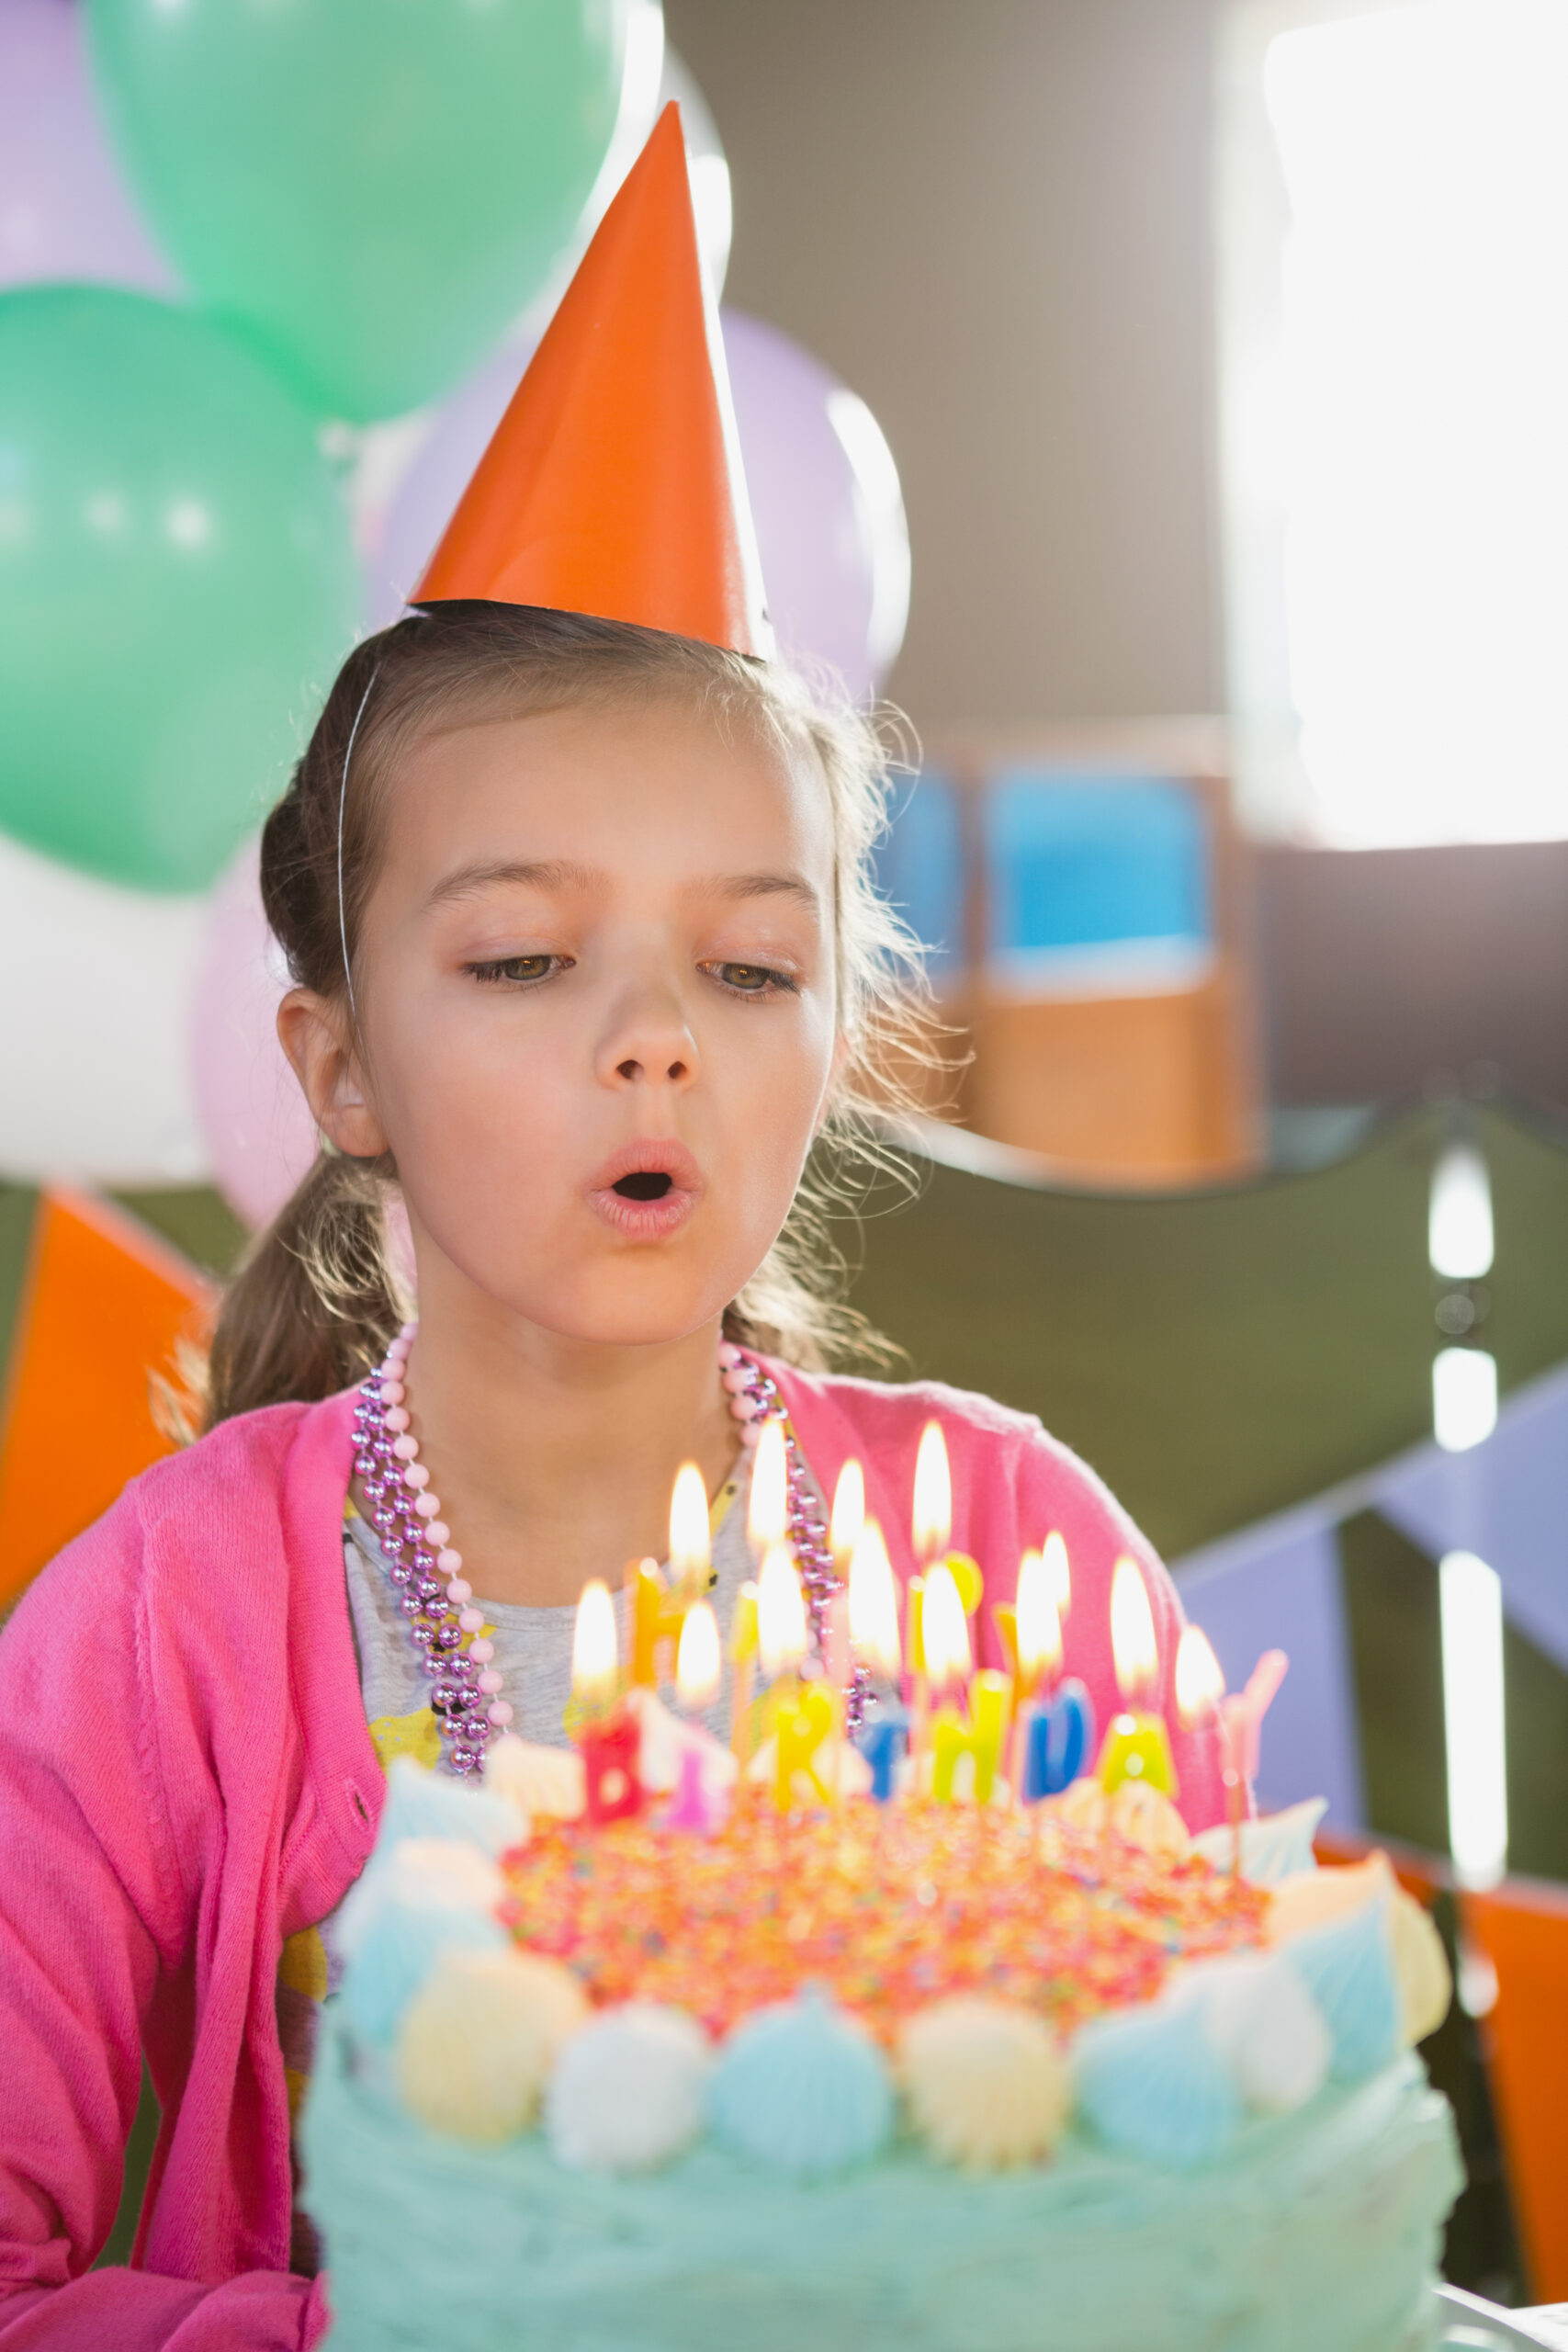 Birthday girl blowing birthday candles